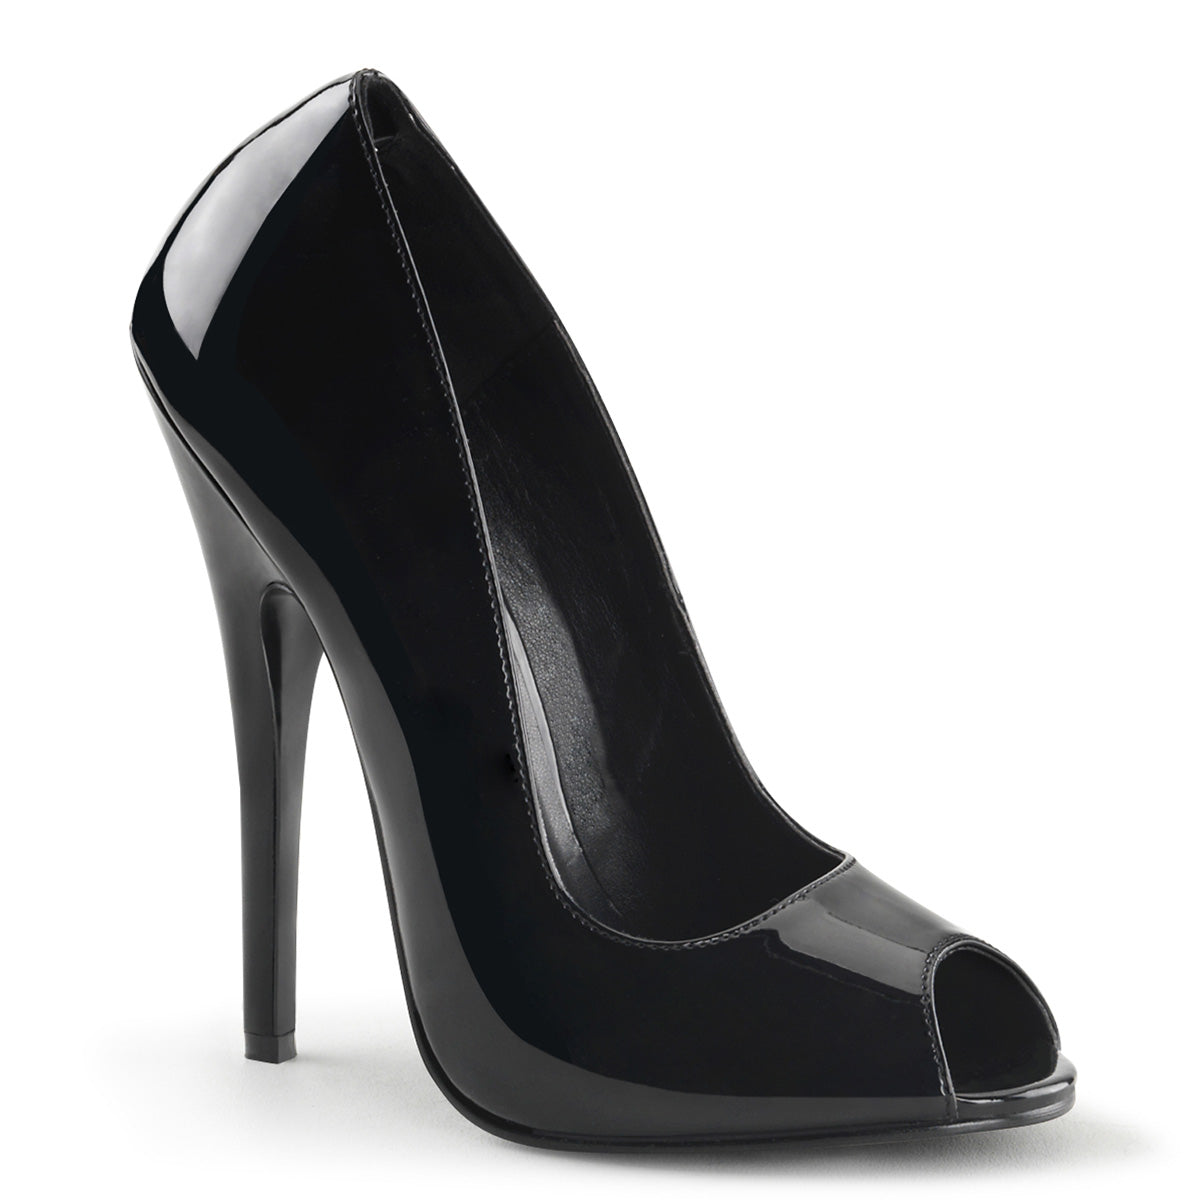 DOMINA-212 Devious 6 Inch Heel Black Patent Erotic Shoes